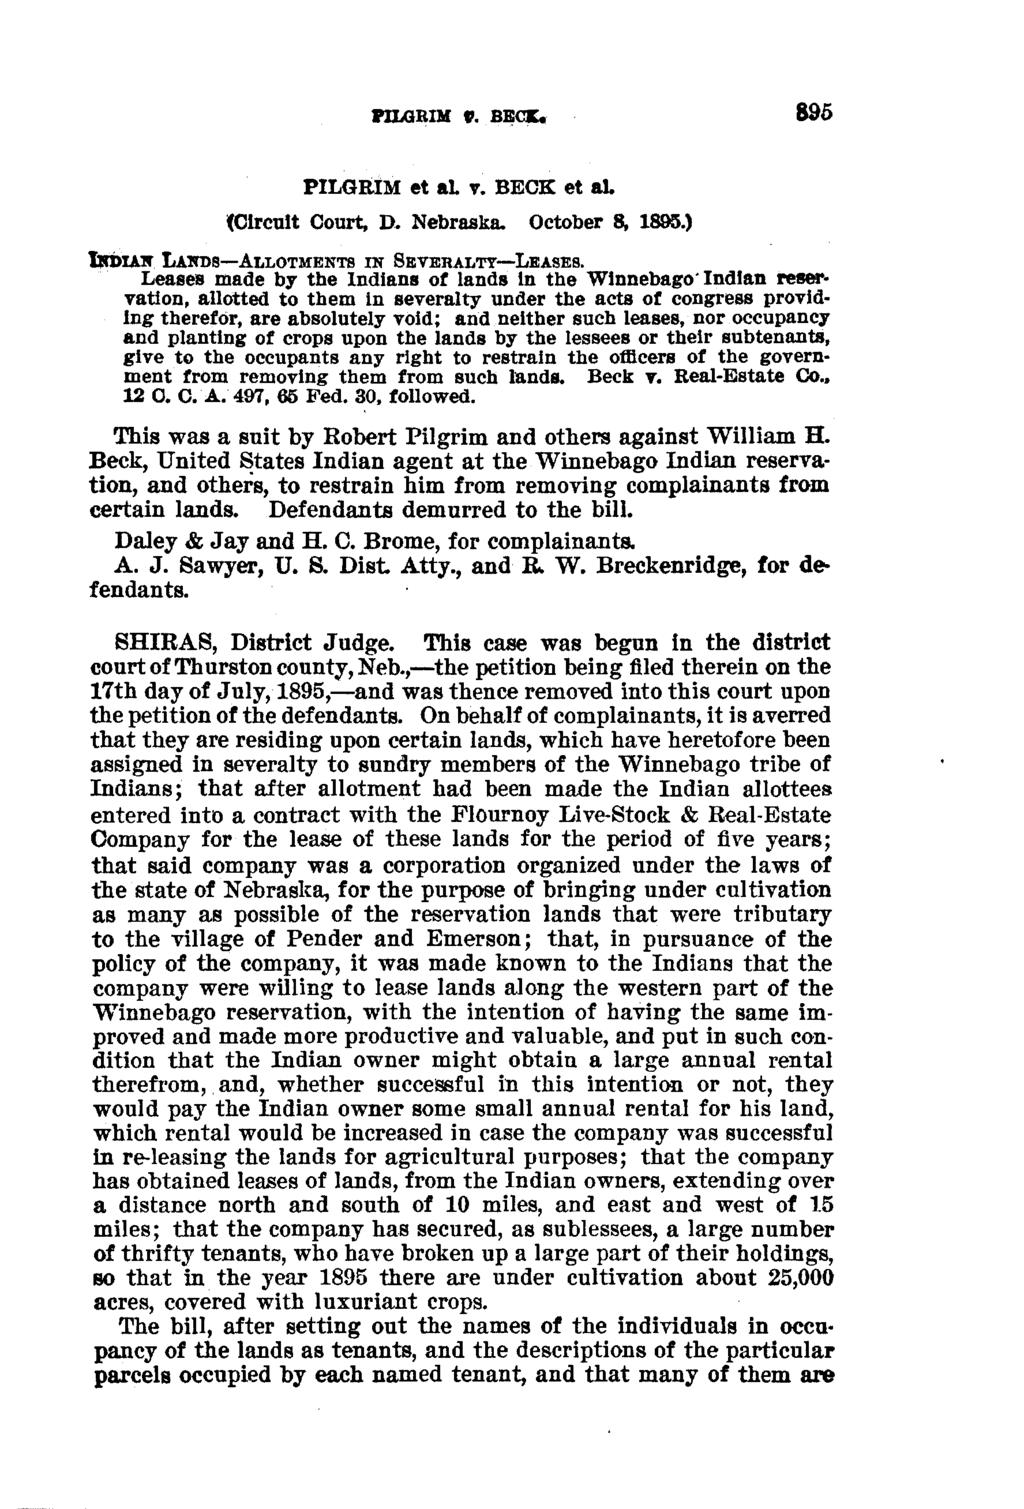 ,. RECL 895 PILGRIM et al v. BECK et al (Circuit Court, D. Nebraska. October 8, 1800.) brdulf LUl'Ds-ALLOTMENTS IN SEVERALTY-LEASES.